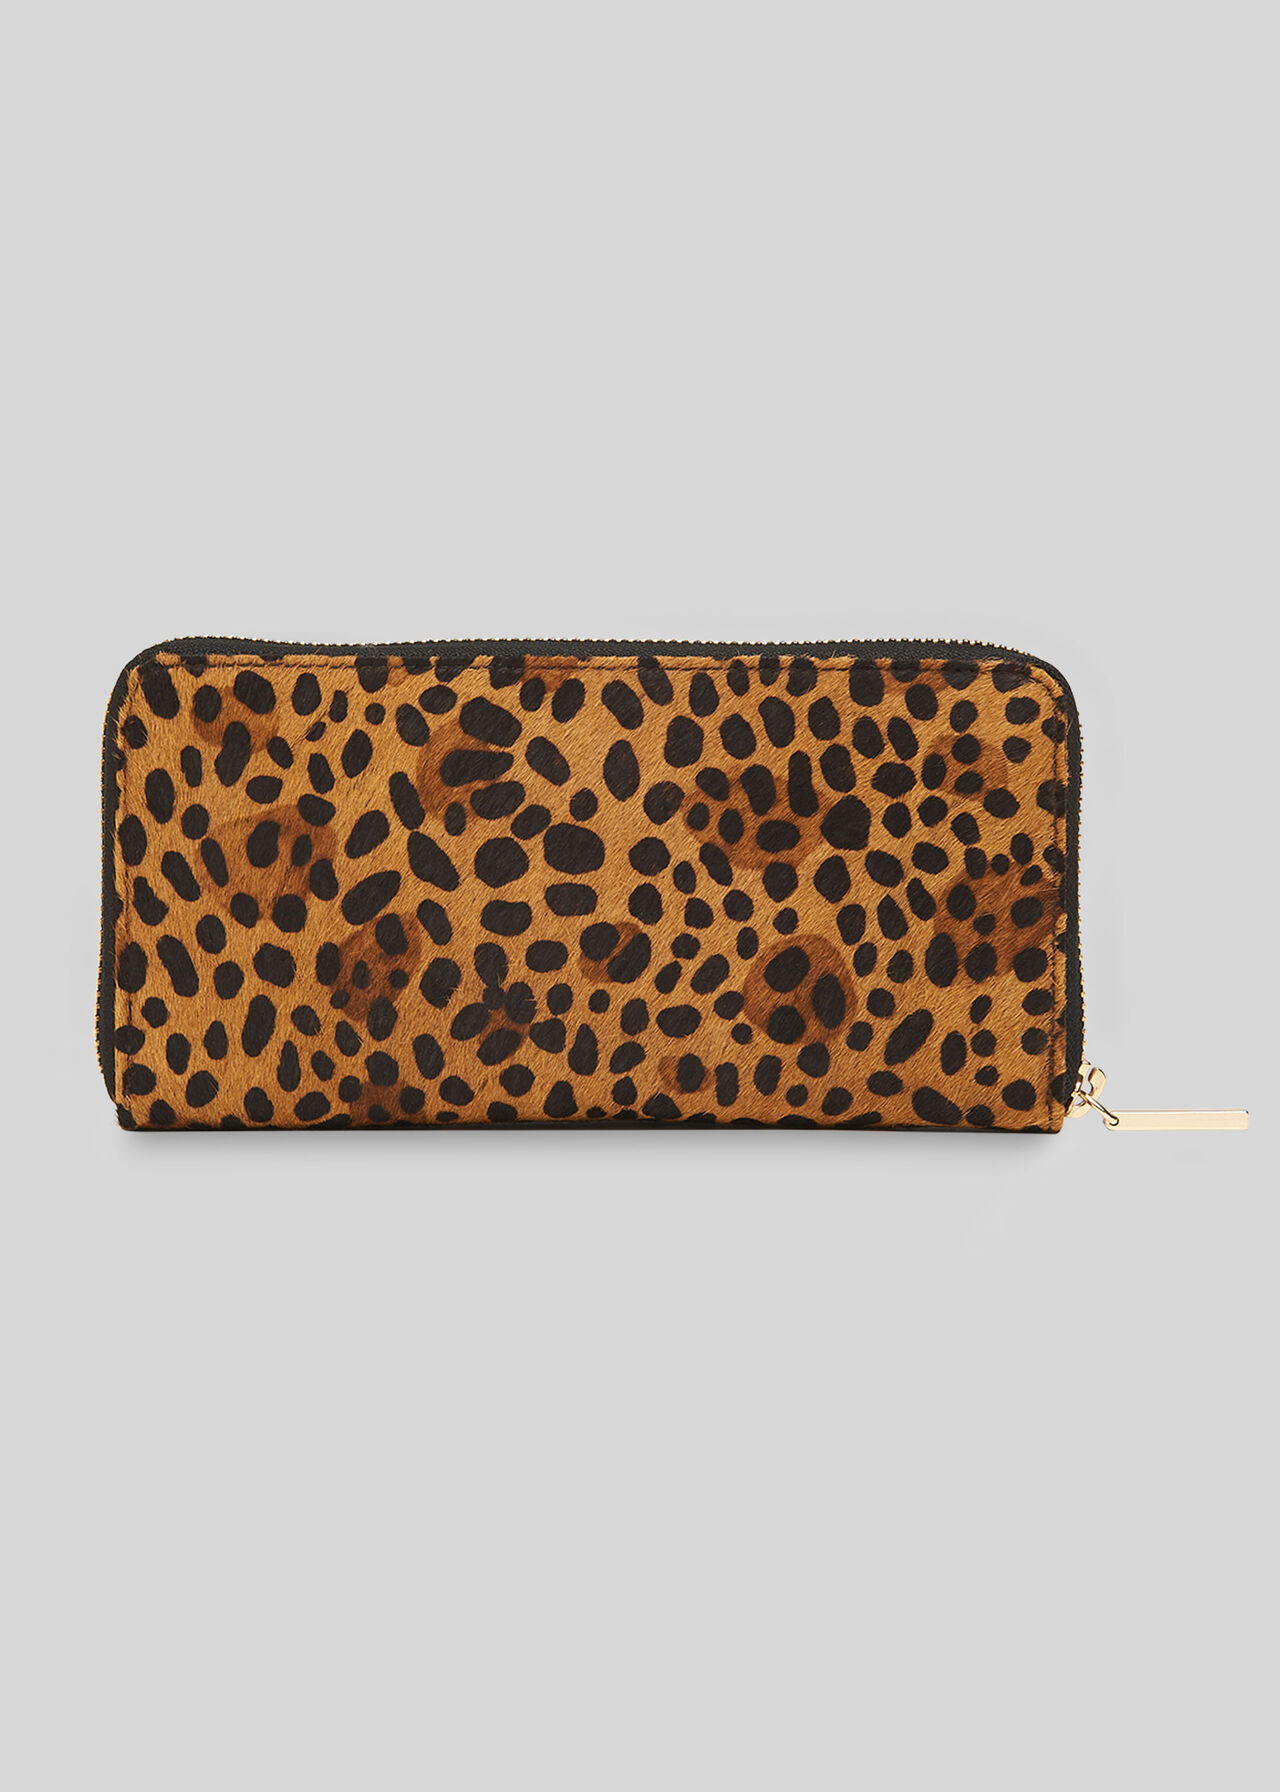 Reigate Leopard Wallet Leopard Print